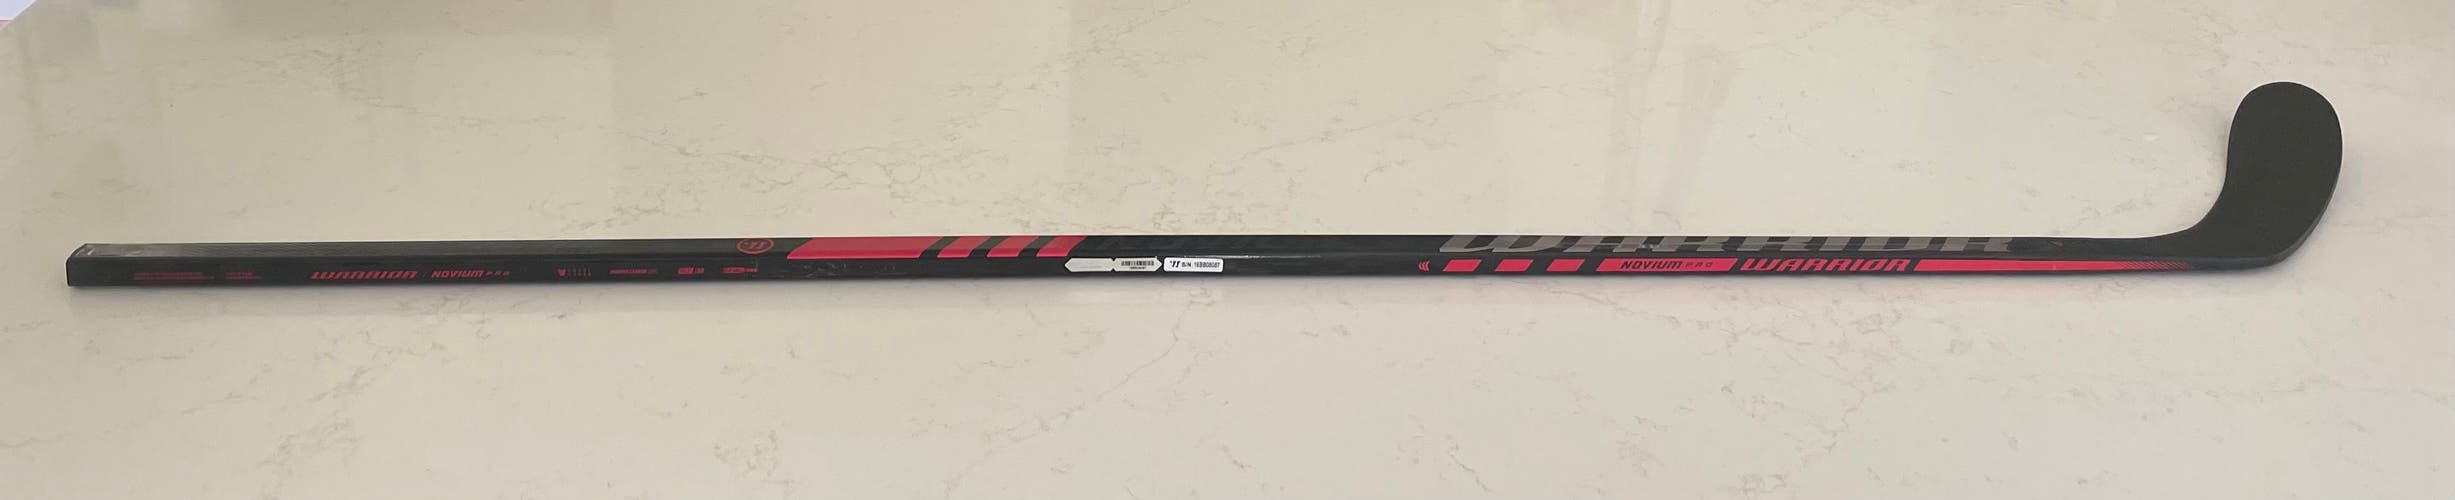 New Intermediate Warrior Novium Pro Left Hand Hockey Stick W28